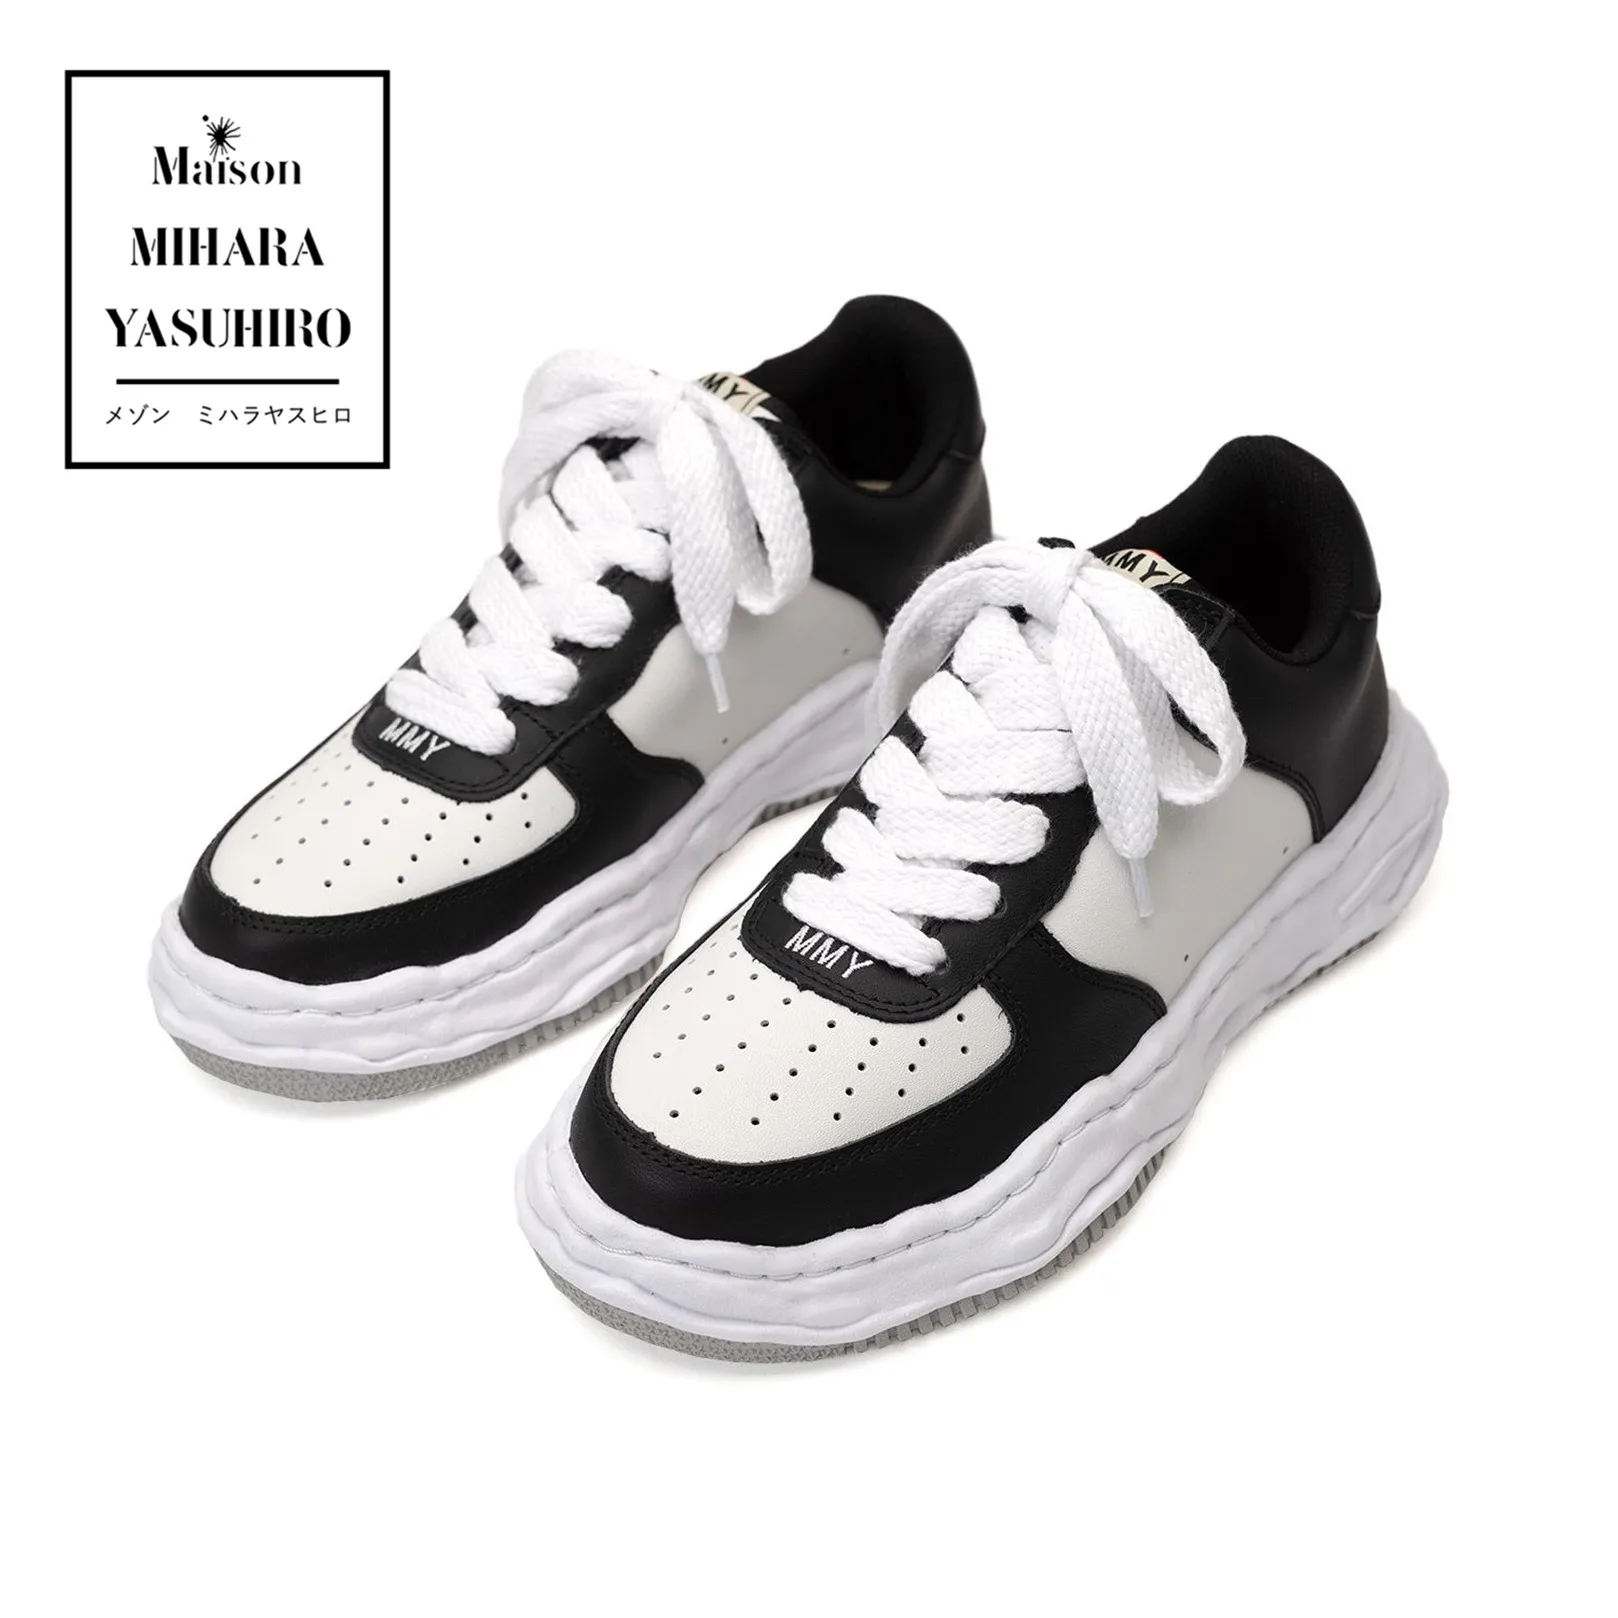 

MMY Maison MIHARA YASUHIRO WAYNE OG Sole Leather Low-top Sneaker Black White Men's Women's canvas shoes